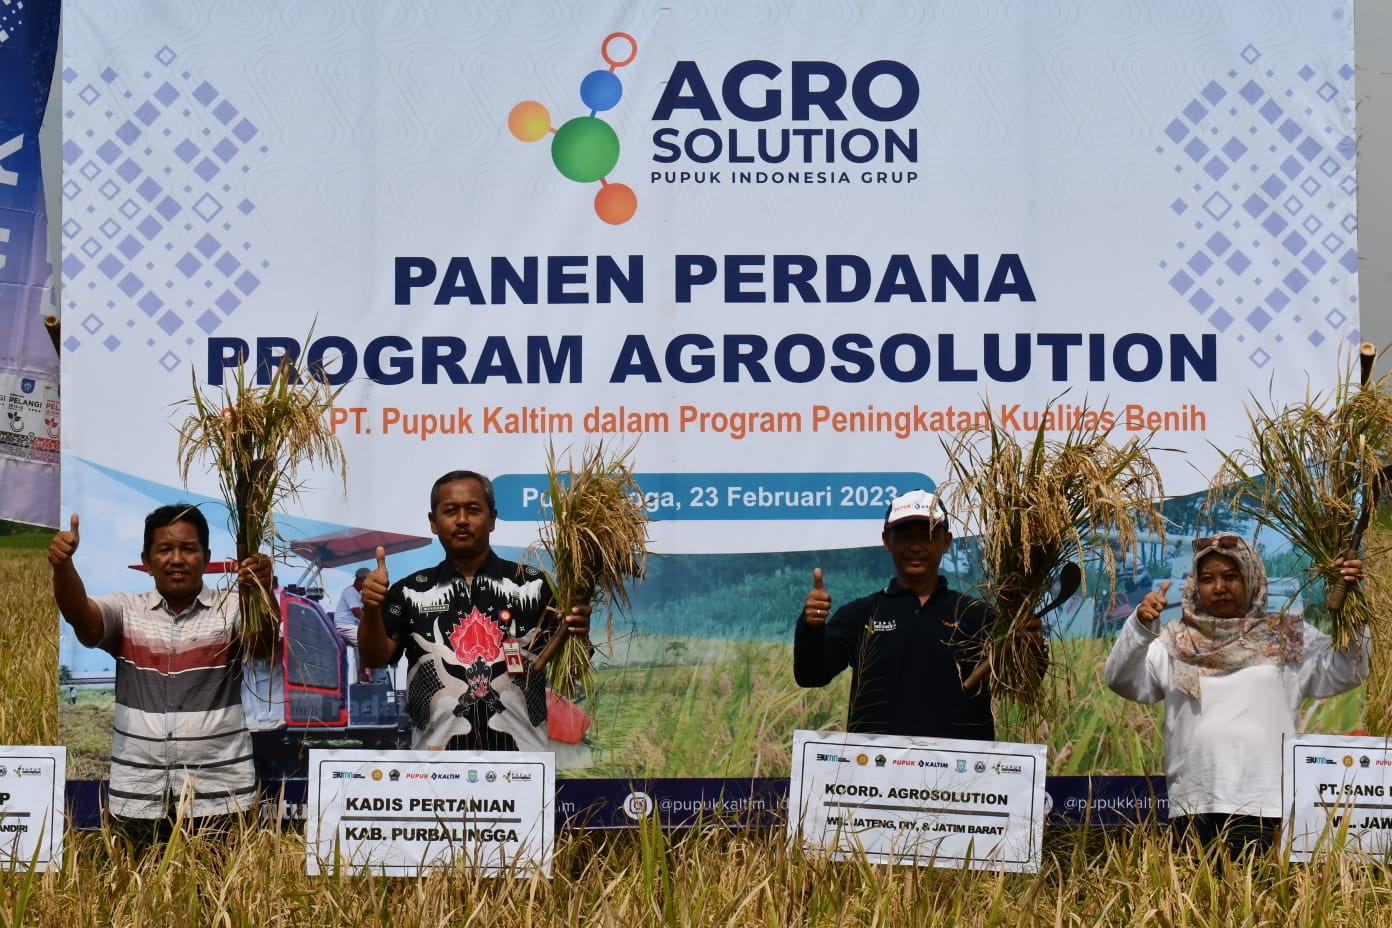 PT Pupuk Kaltim Kembangkan Agrosolution di Purbalingga, 26 Hektar Panen Perdana